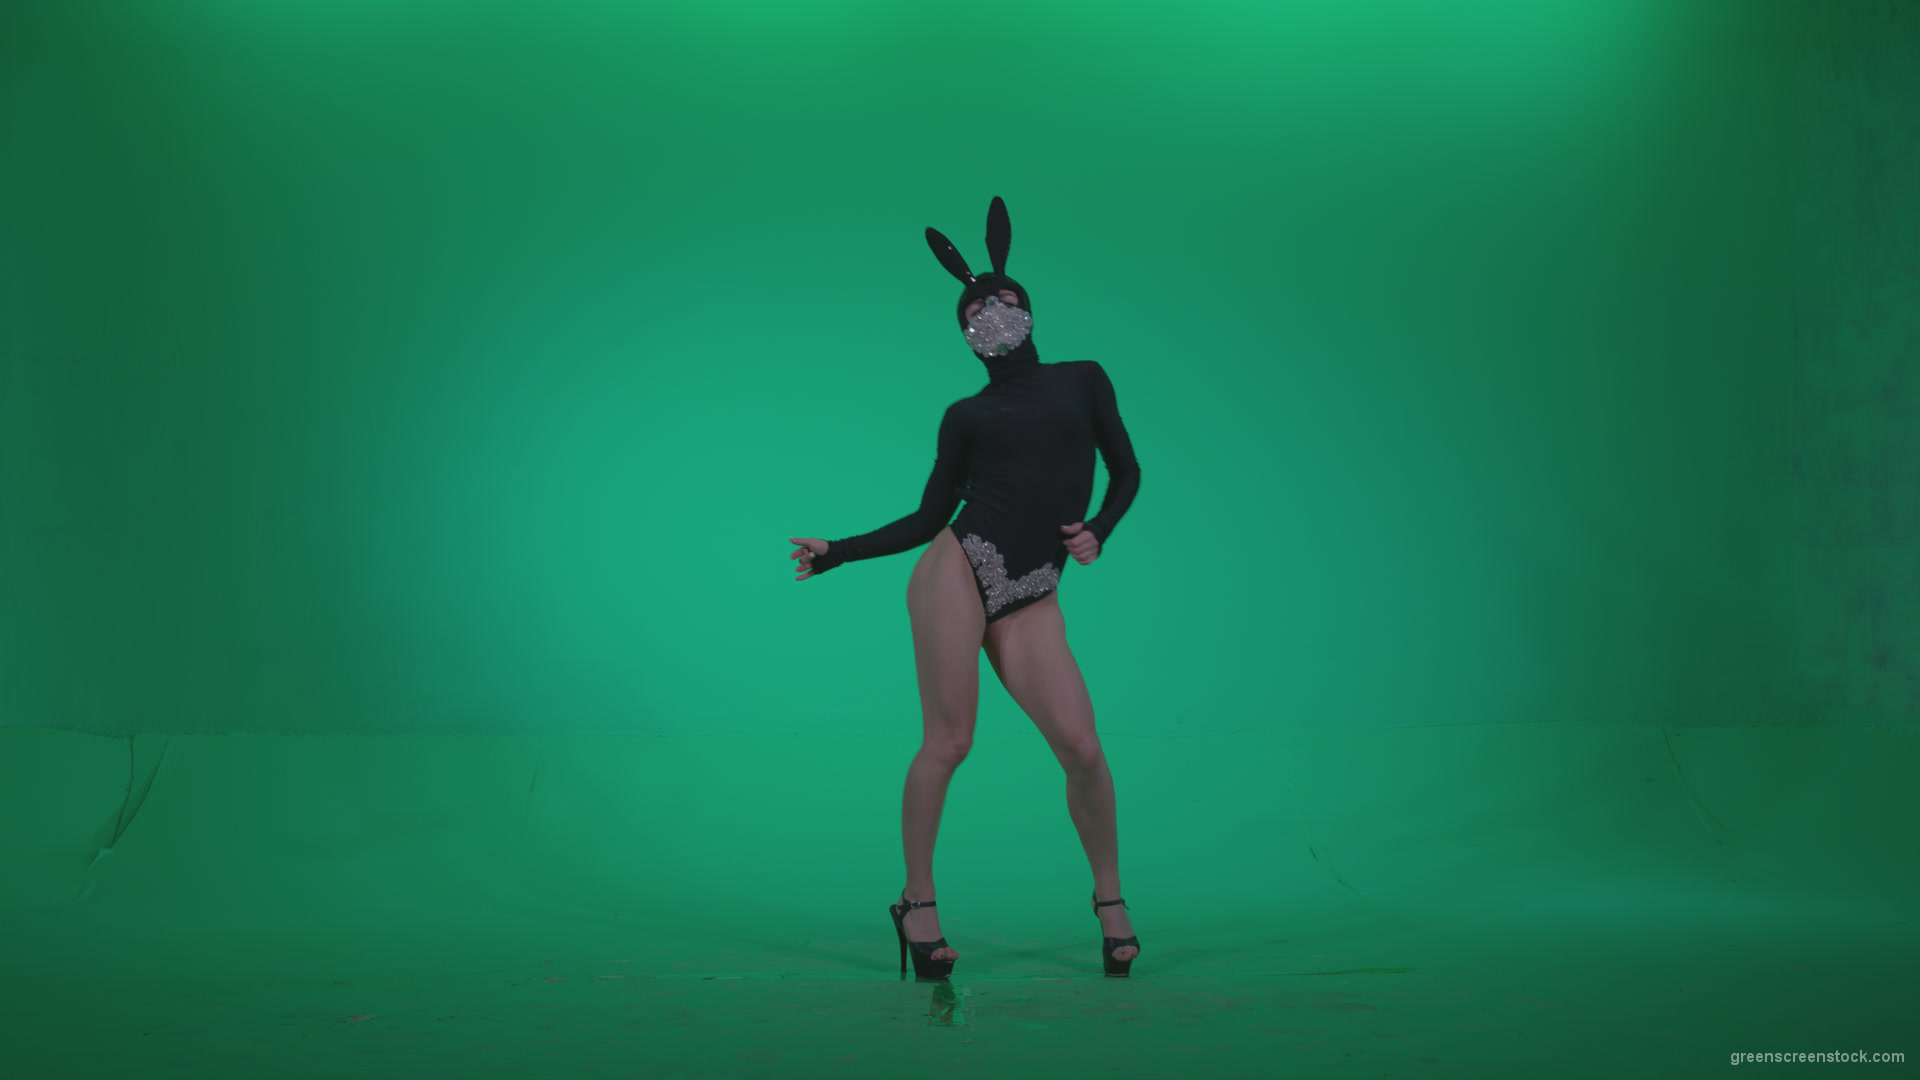 Go-go-Dancer-Black-Rabbit-u9-Green-Screen-Video-Footage_009 Green Screen Stock